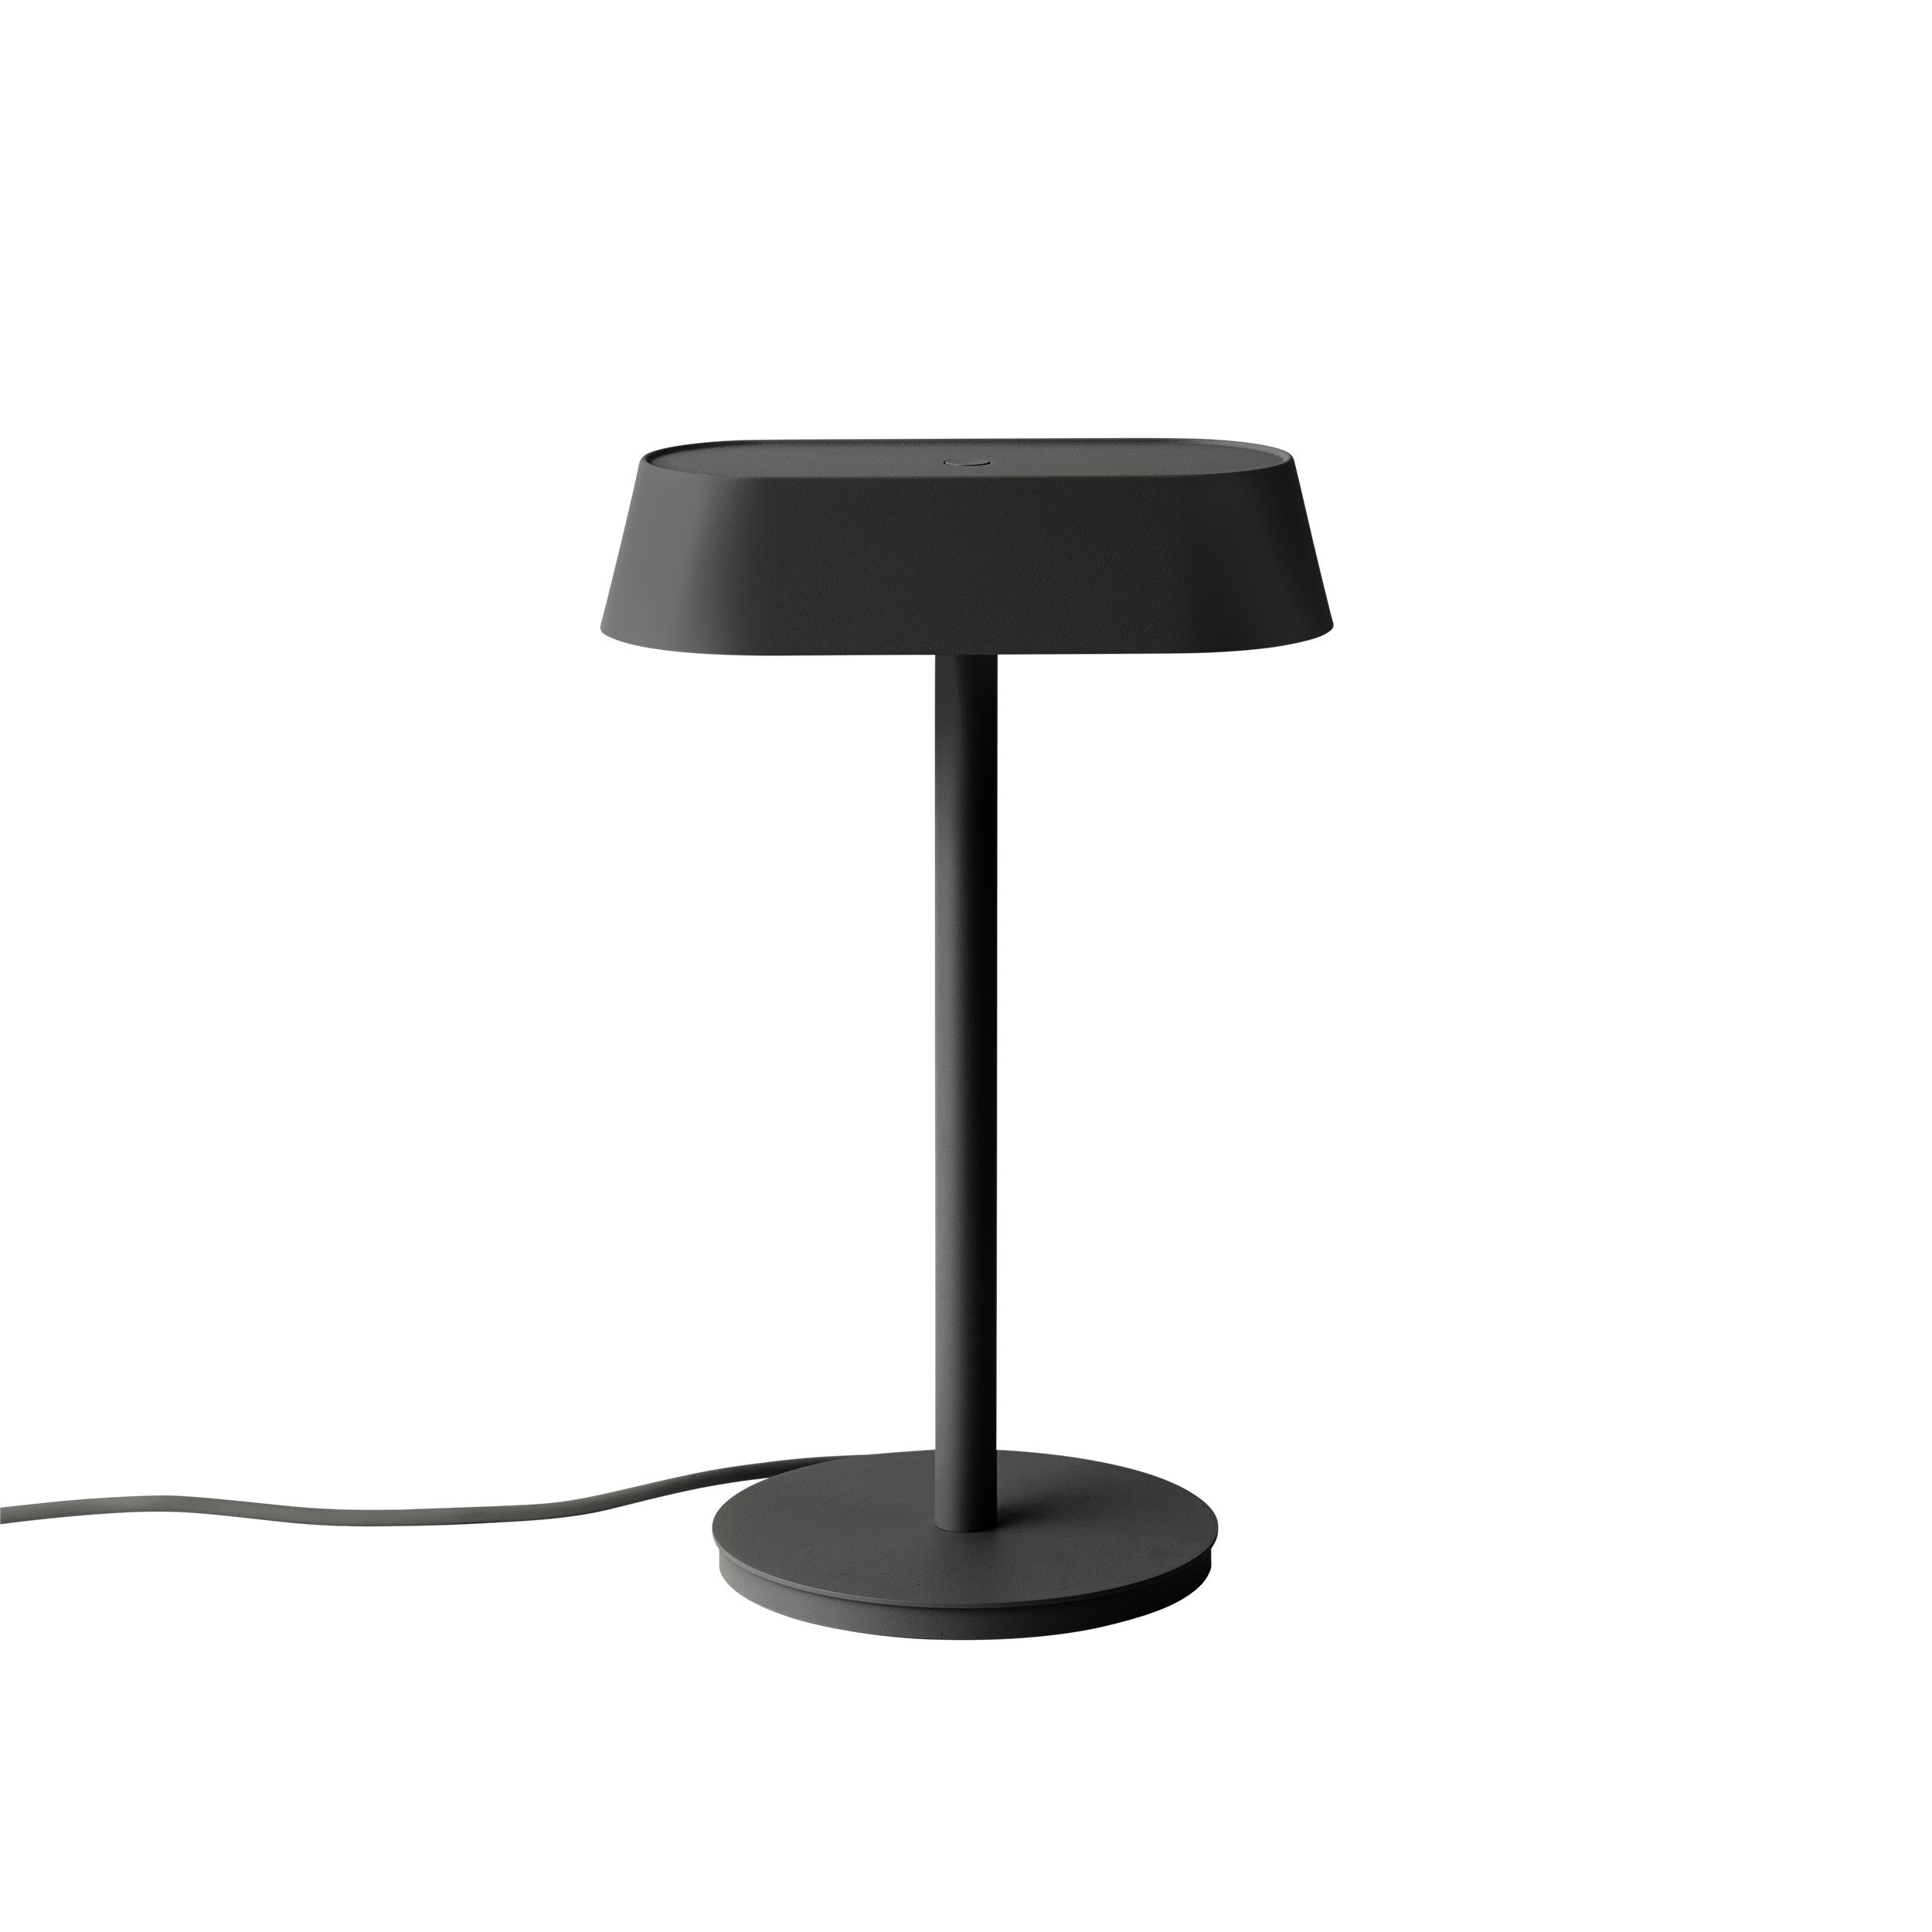 [muuto]무토 리니얼 테이블 블랙 Linear Table Lamp_Black